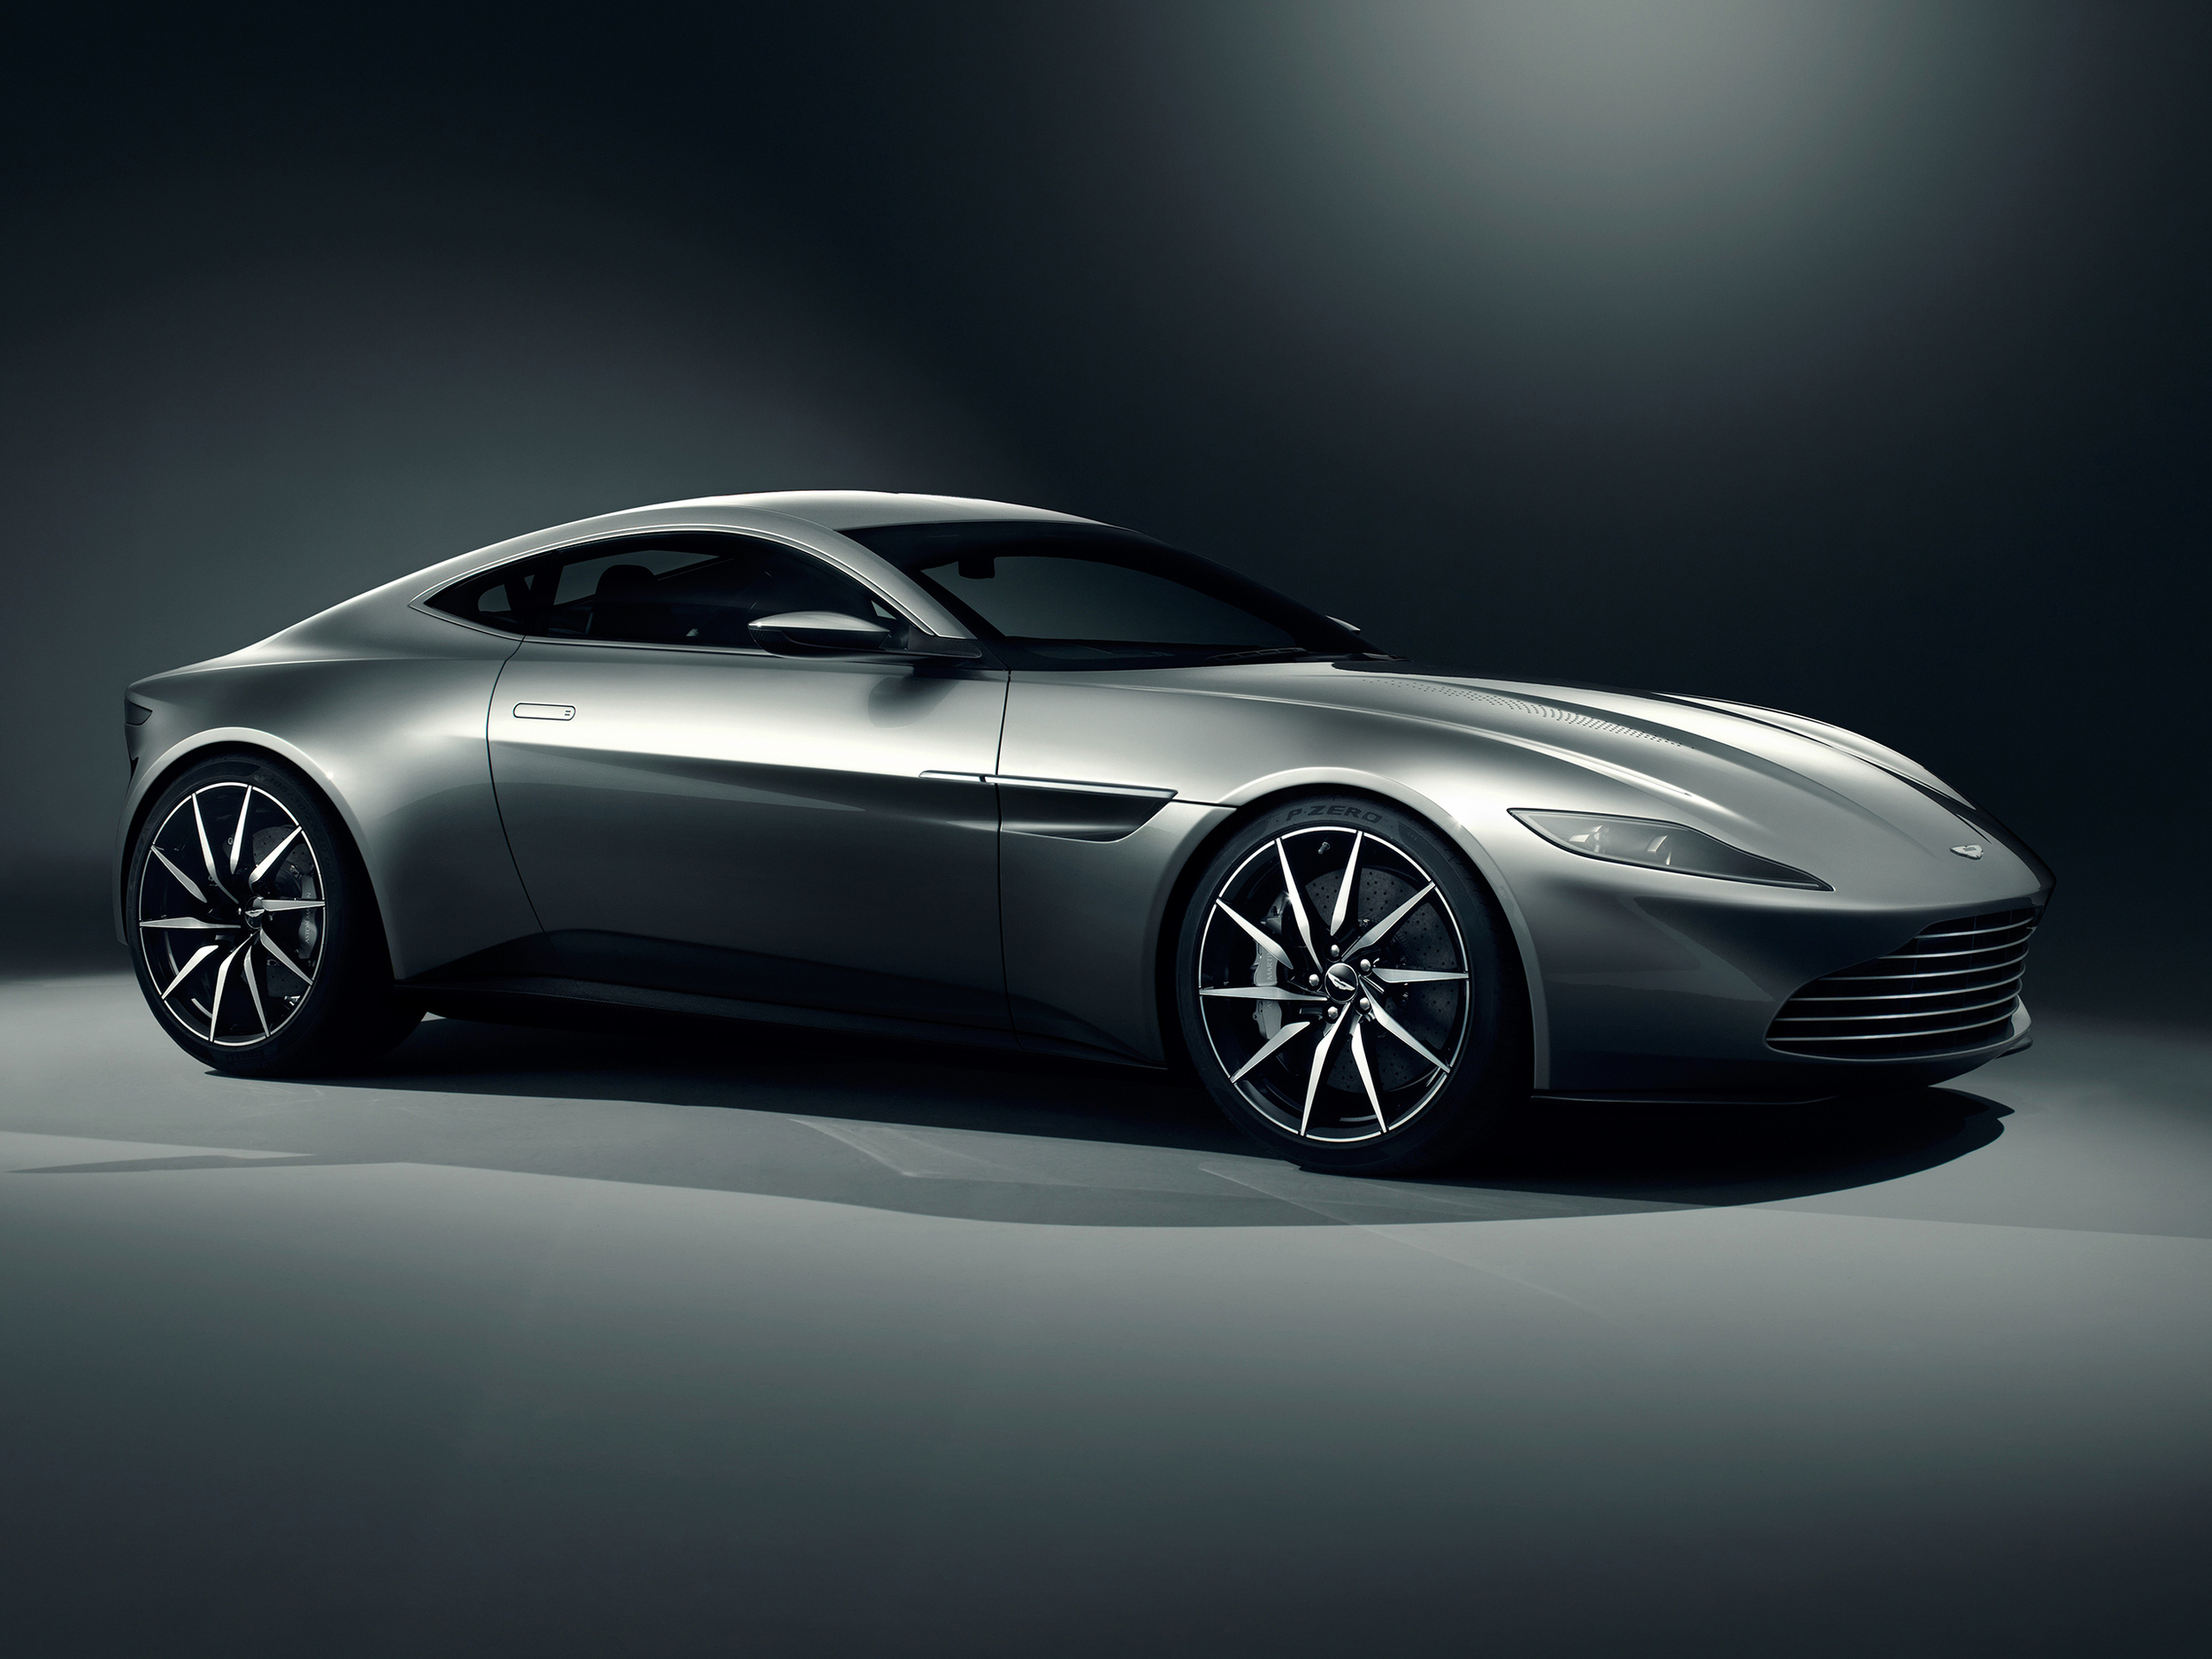 007's Aston Martin DB10 set for Regent Street Motor Show